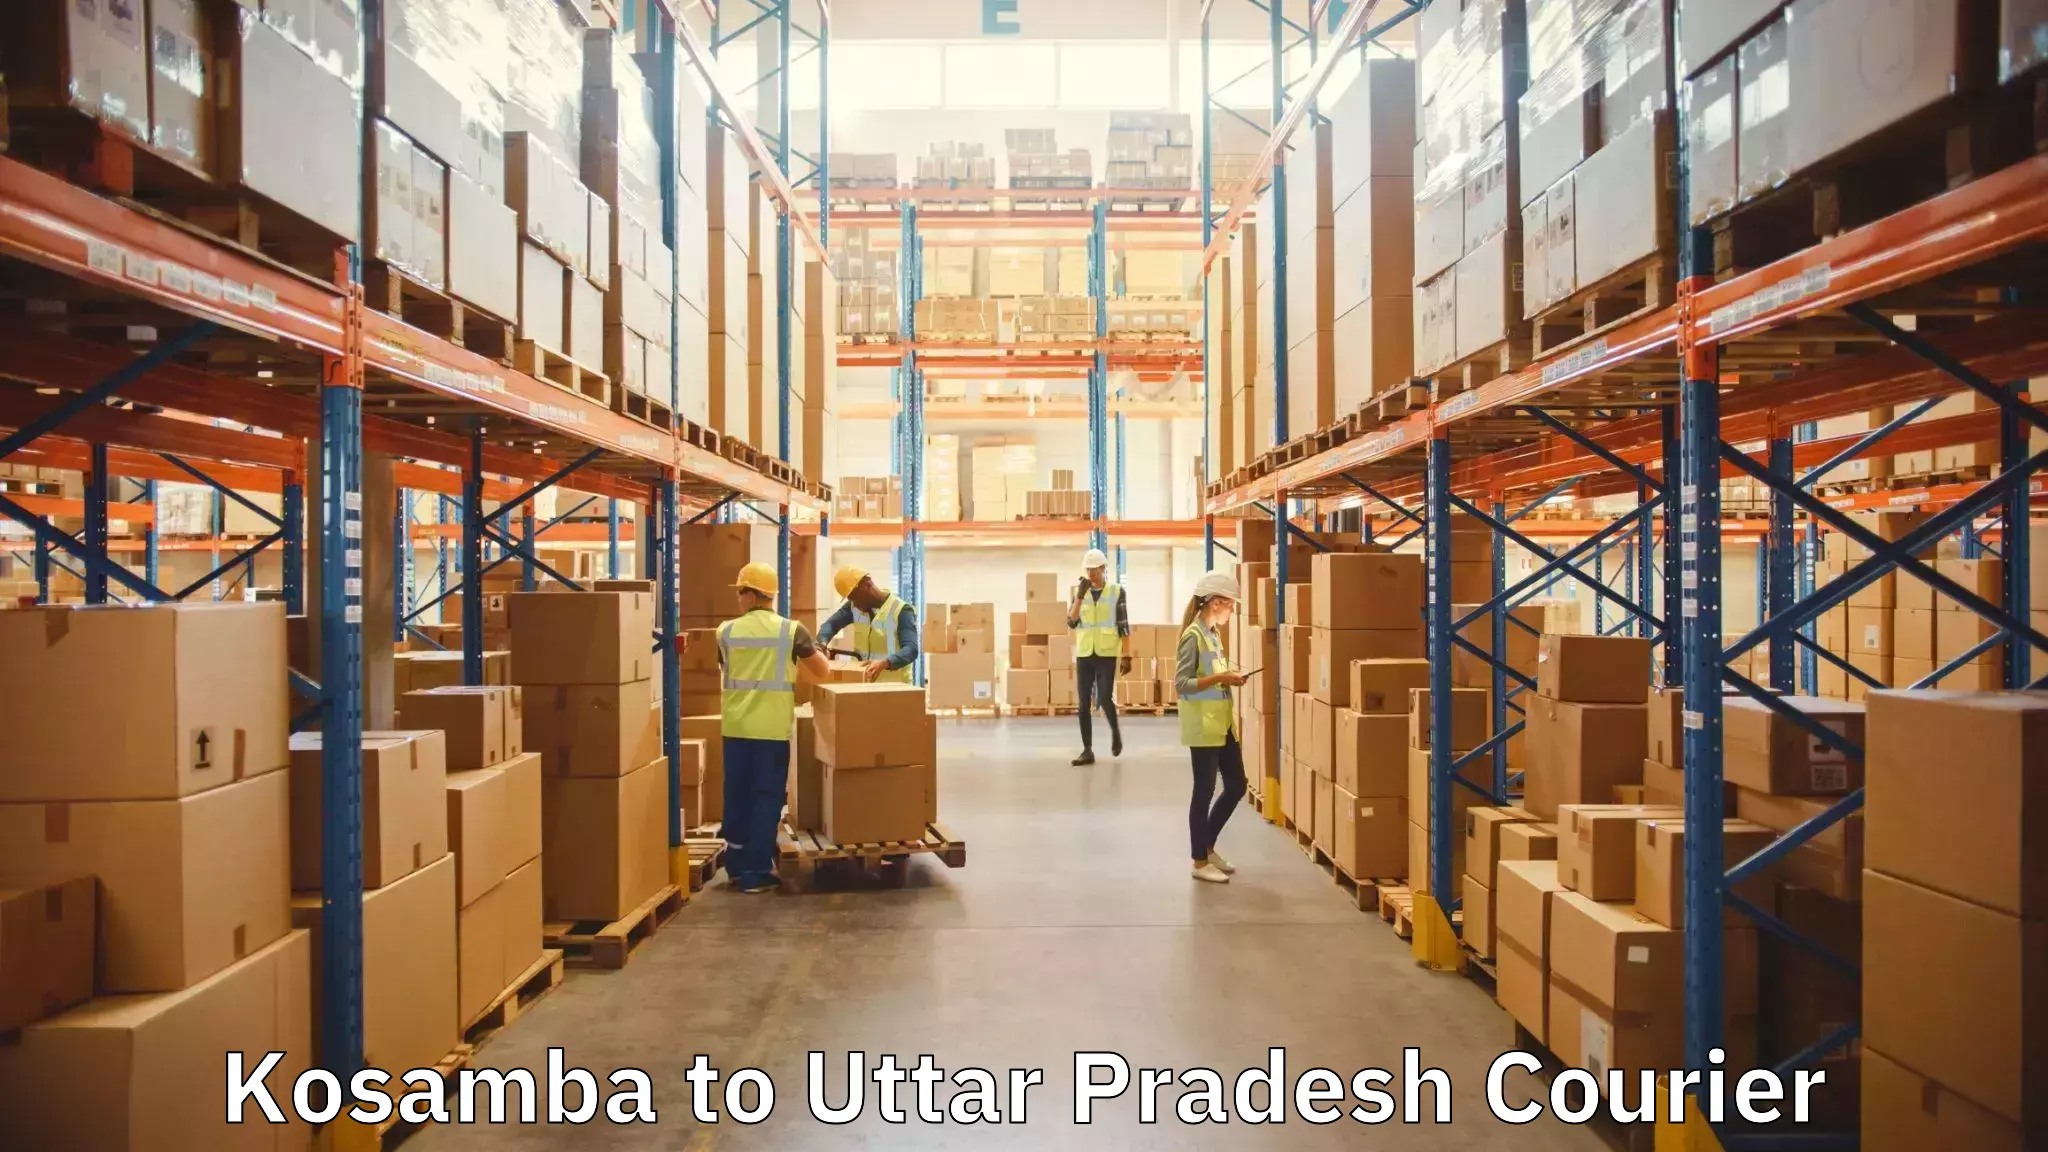 Trusted relocation experts Kosamba to Uttar Pradesh